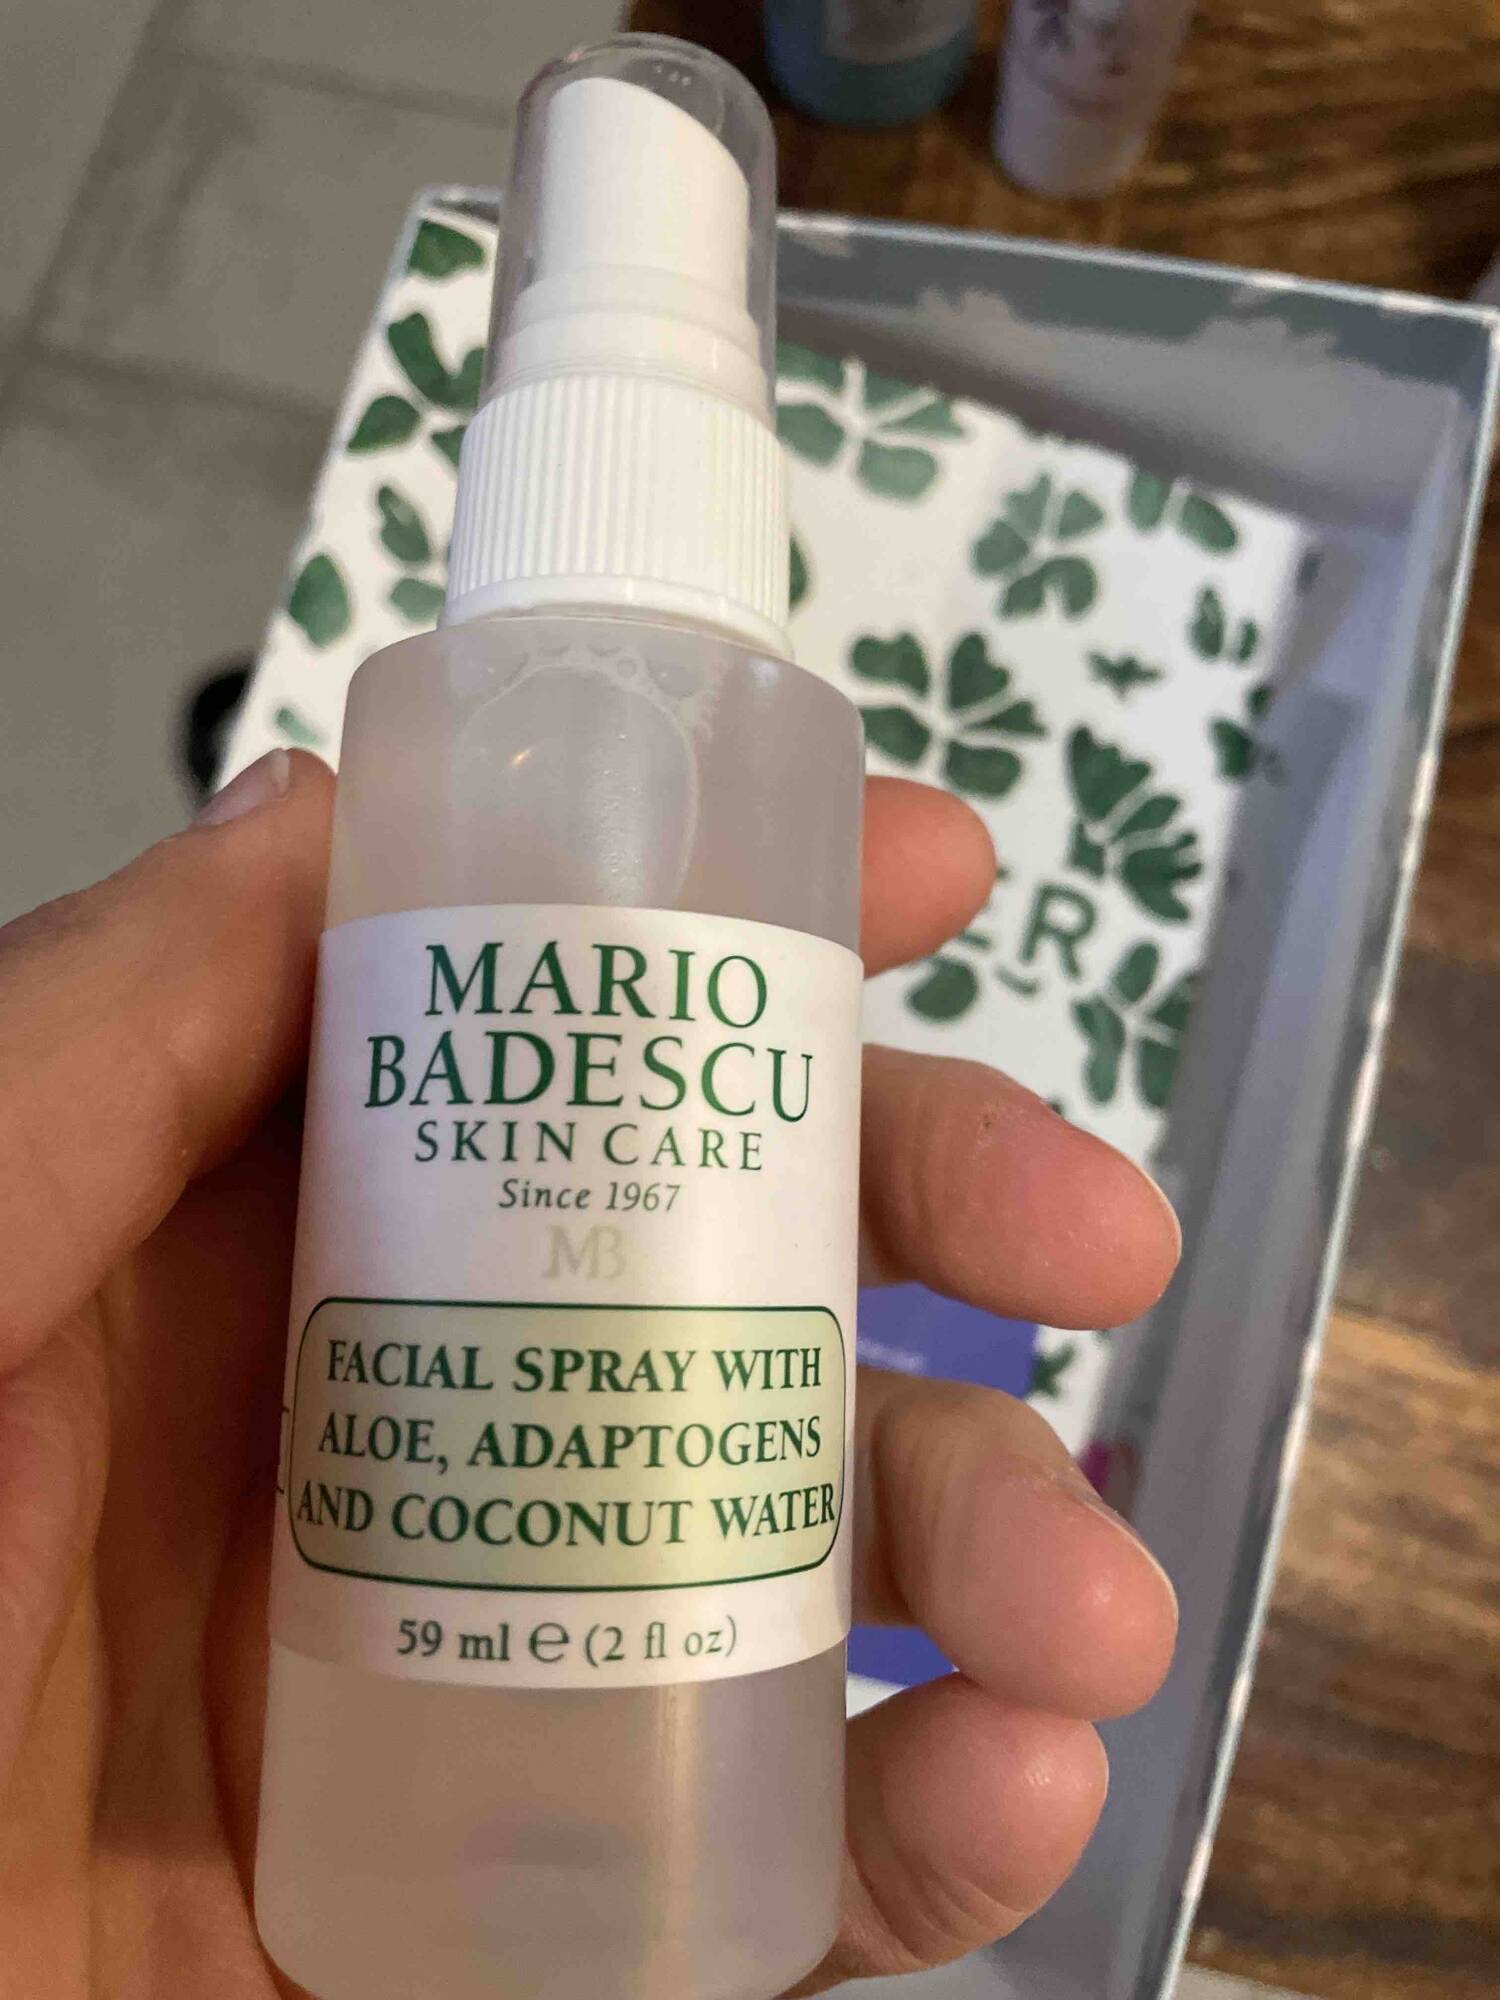 MARIO BADESCU - Skin care - Facial spray with aloe, adaptogens and coconut water